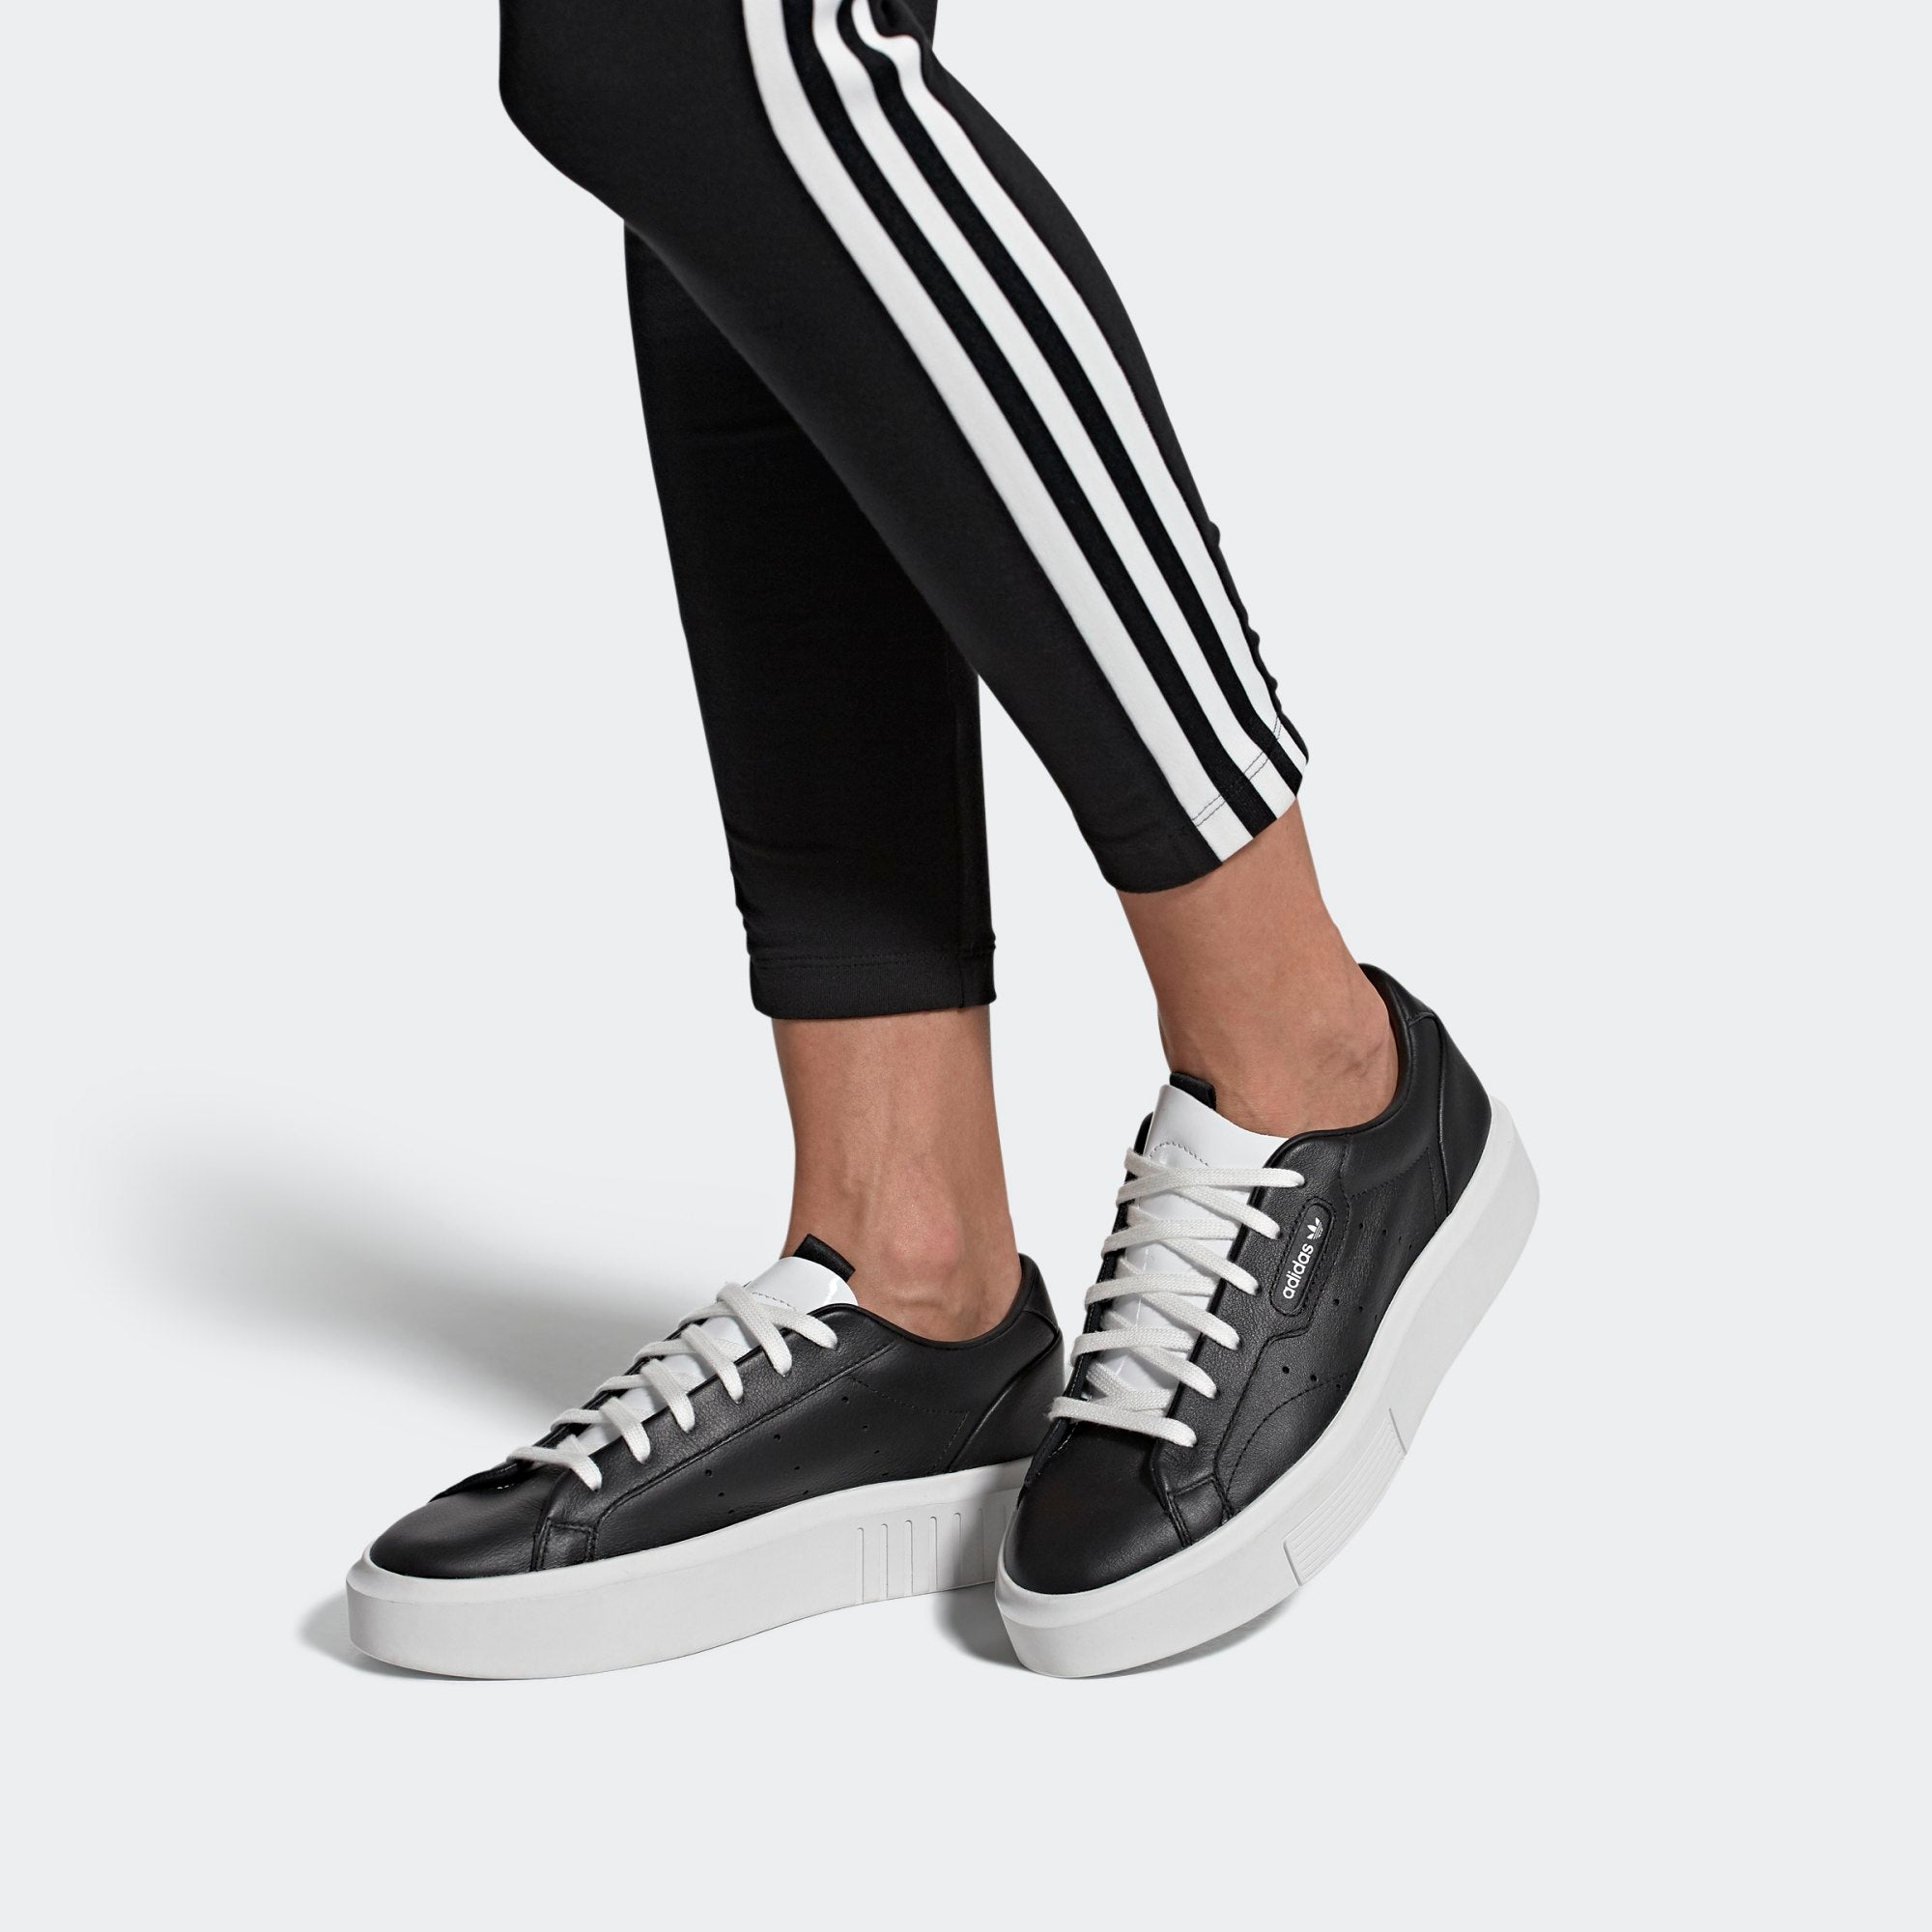 adidas sleek super shoes